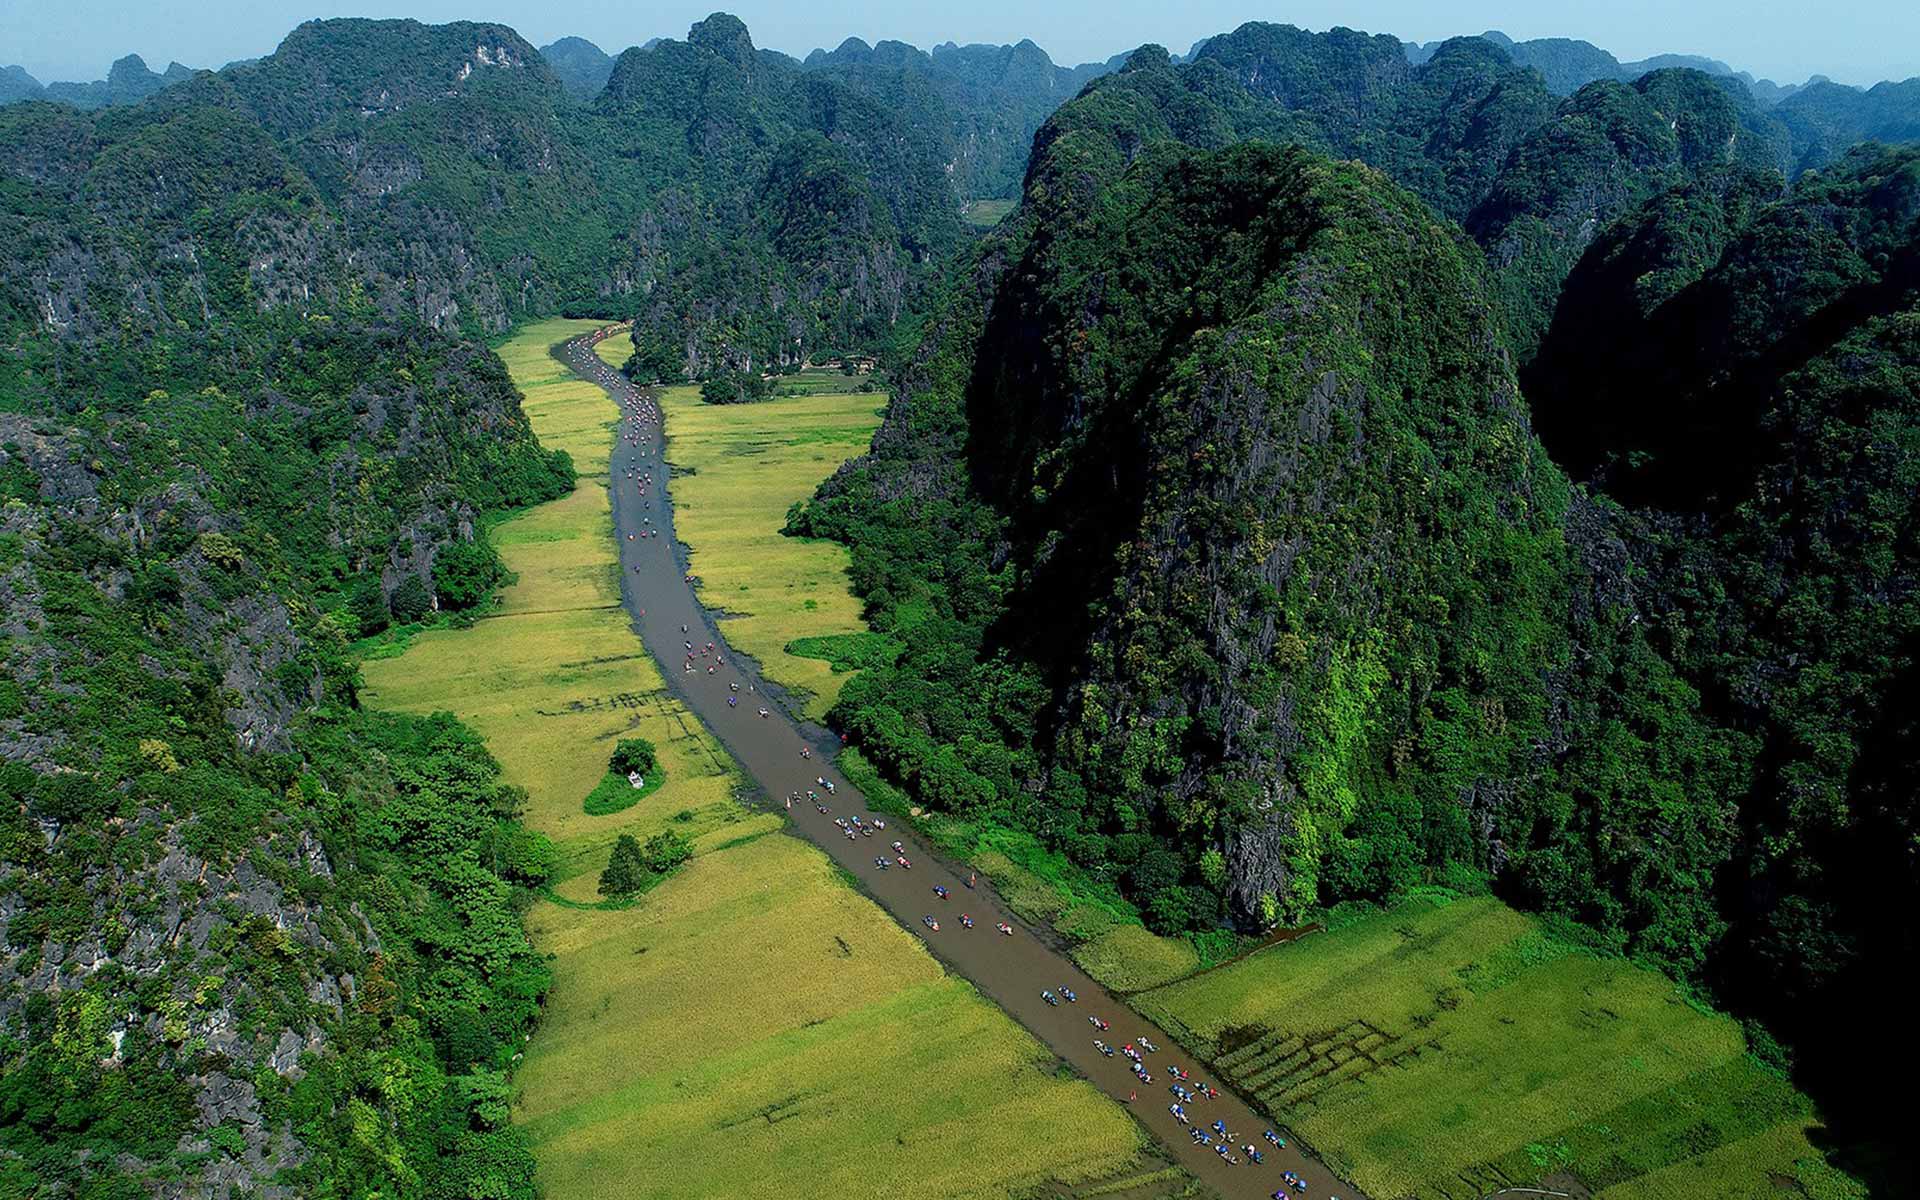 Spectacular aerial view of Tam Coc landscape